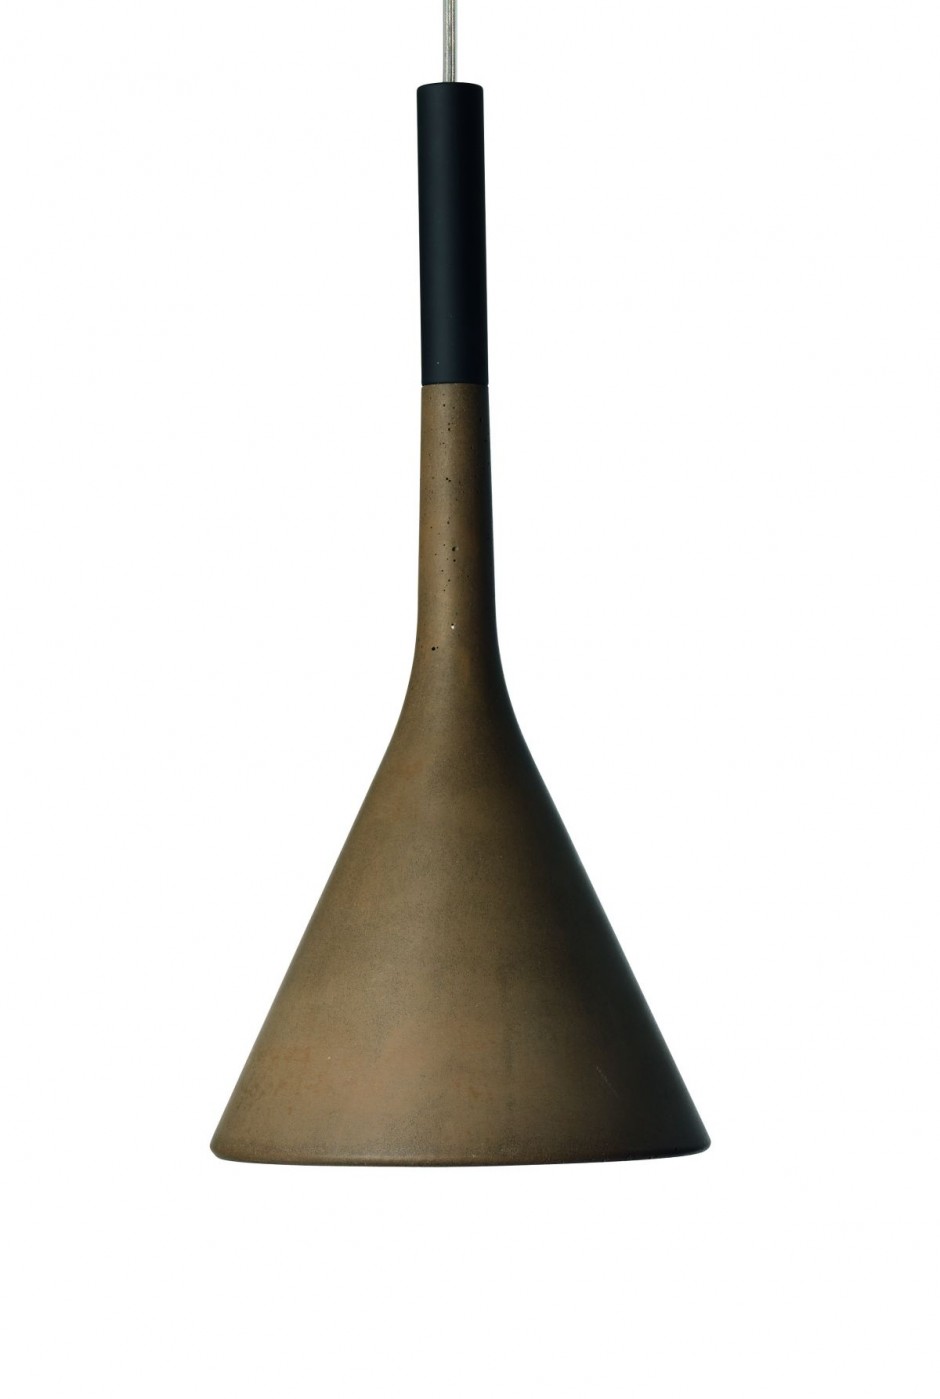 The Aplomb Lamp by Lucidi & Pevere for Foscarini 